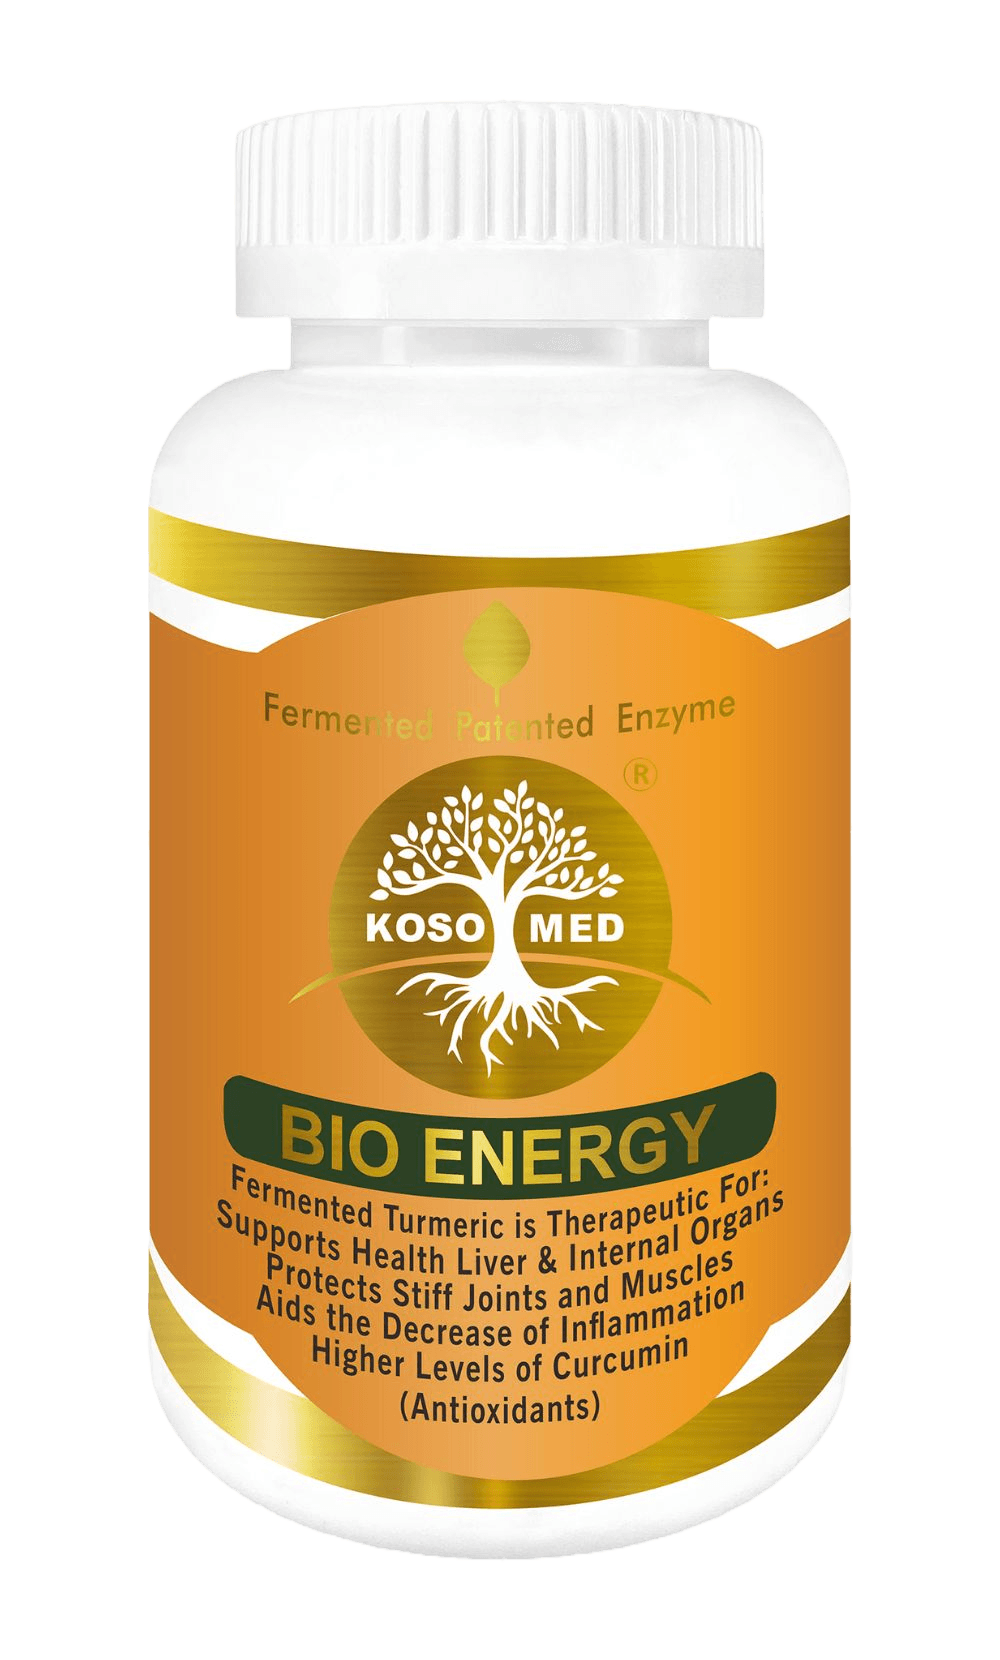 Bio Energy from Koso Med